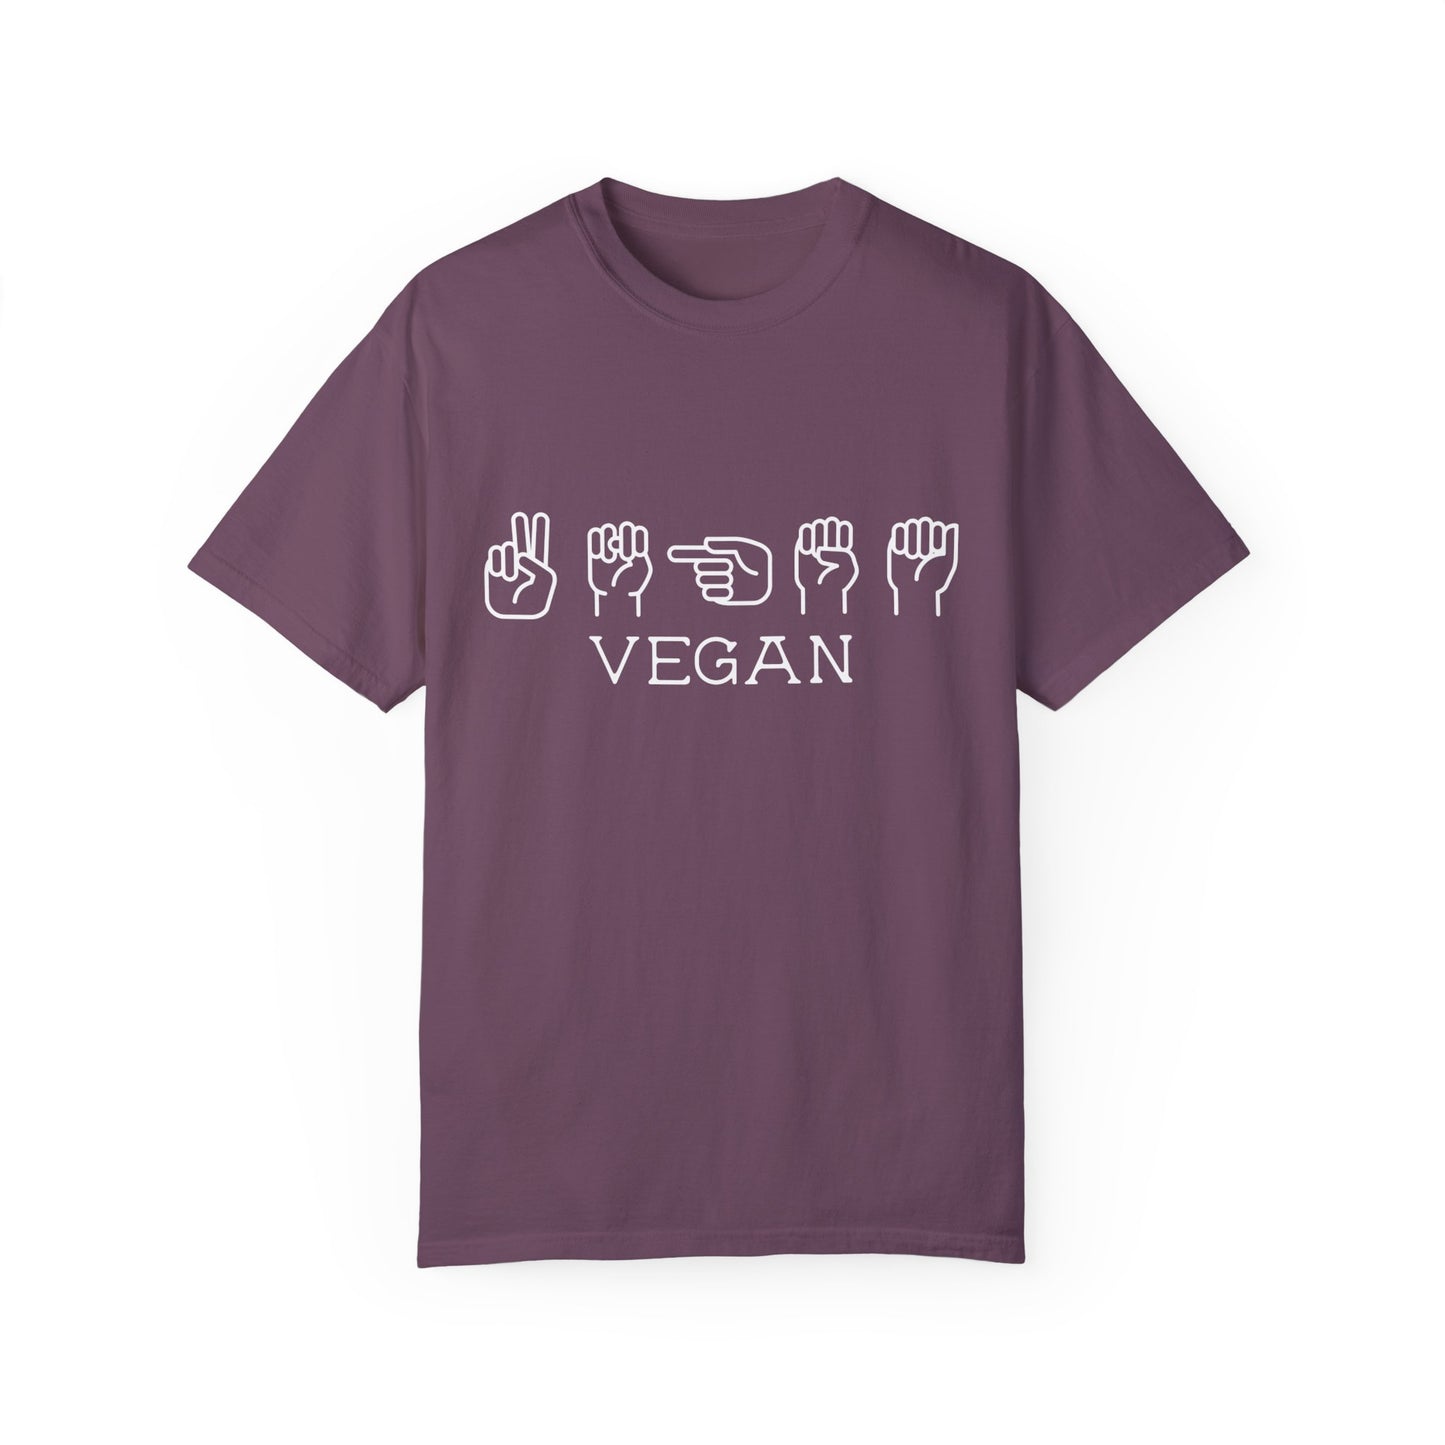 Vegan American Sign Language Tee Shirt in Dark Colors {Unisex}